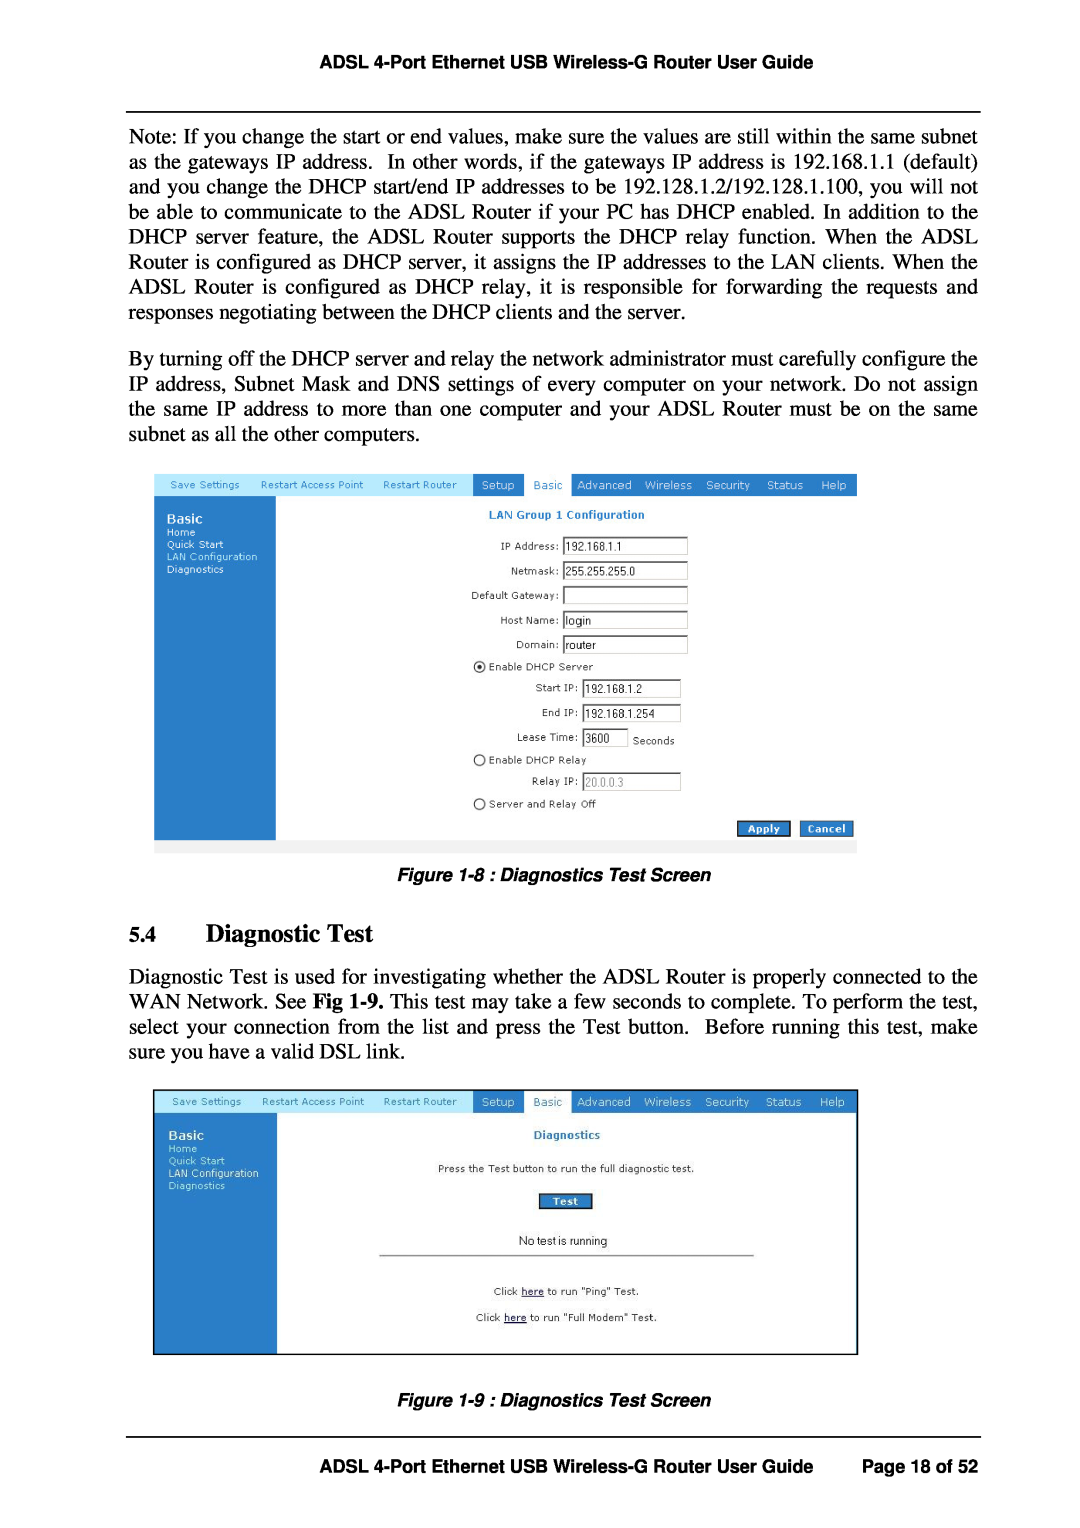 APC ADSL 4-Port manual Diagnostic Test, 8 Diagnostics Test Screen, 9 Diagnostics Test Screen 